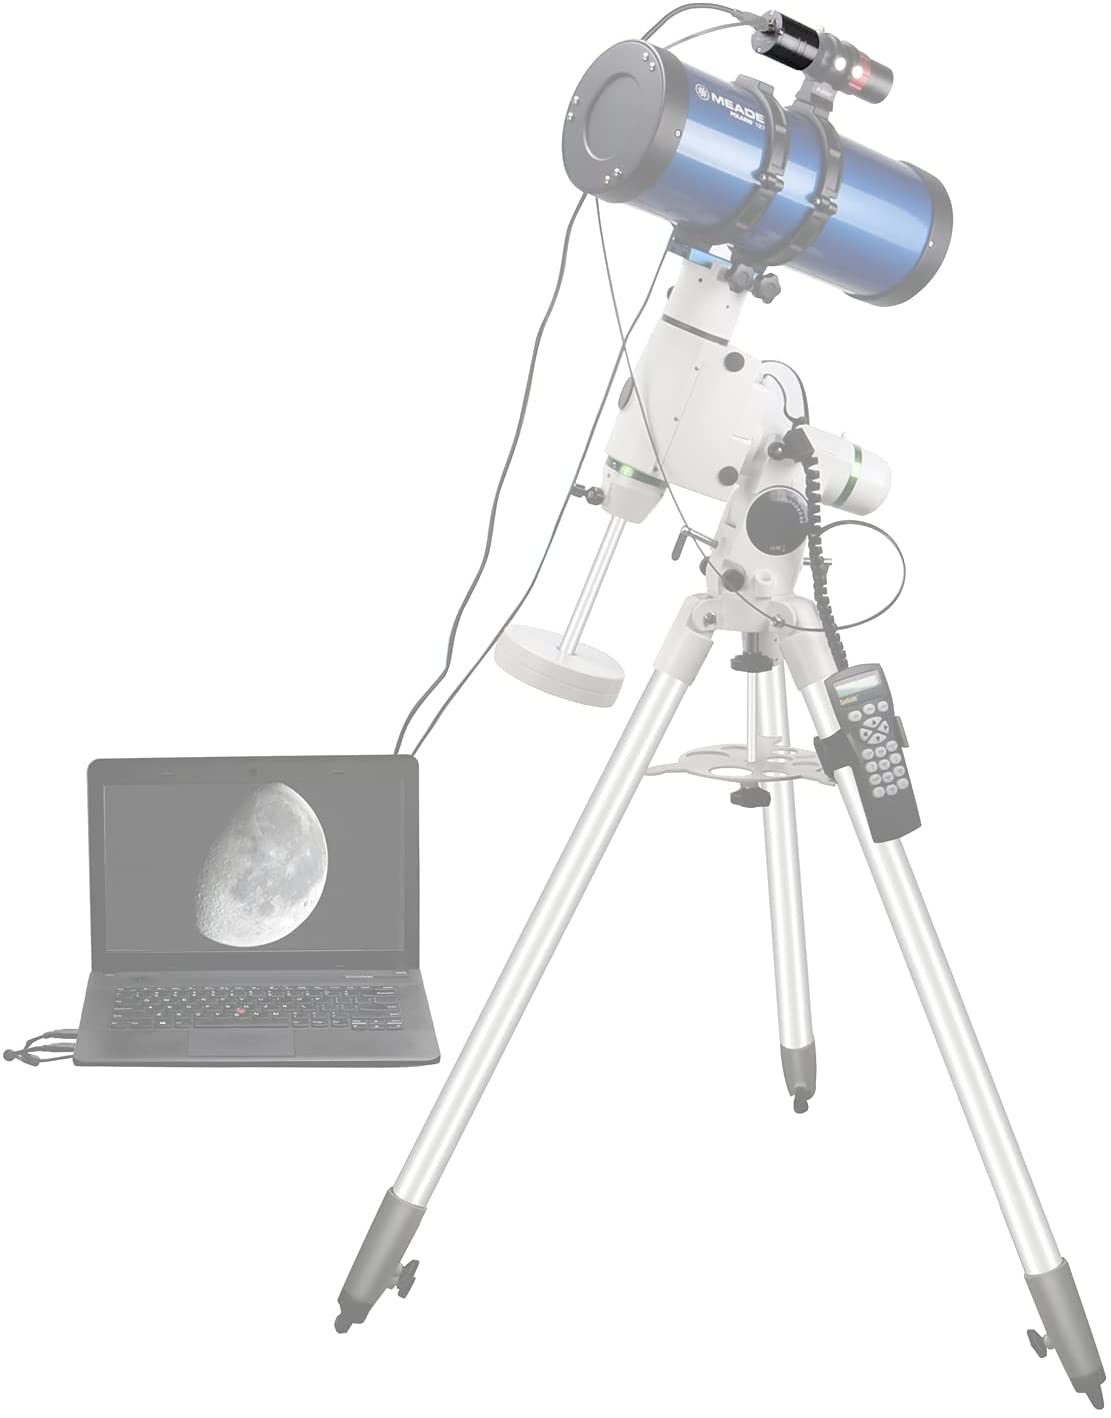 Svbony SV305M Pro Telescope Camera Astronomy, Telescope eyepiece with 2MP USB3.0 1.25 Inches,Guide Camera